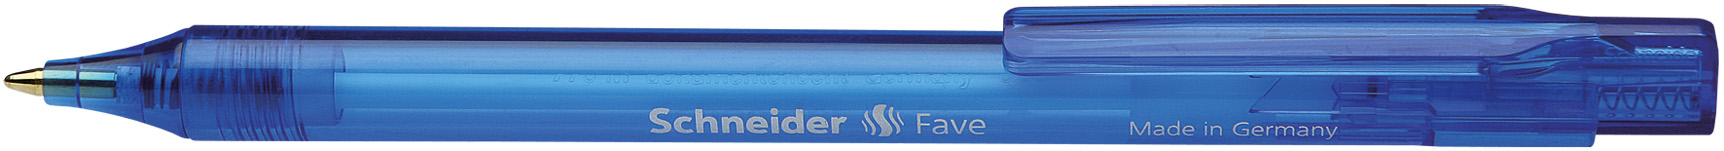 Kulspetspenna Schneider Fave blå 13060143_1